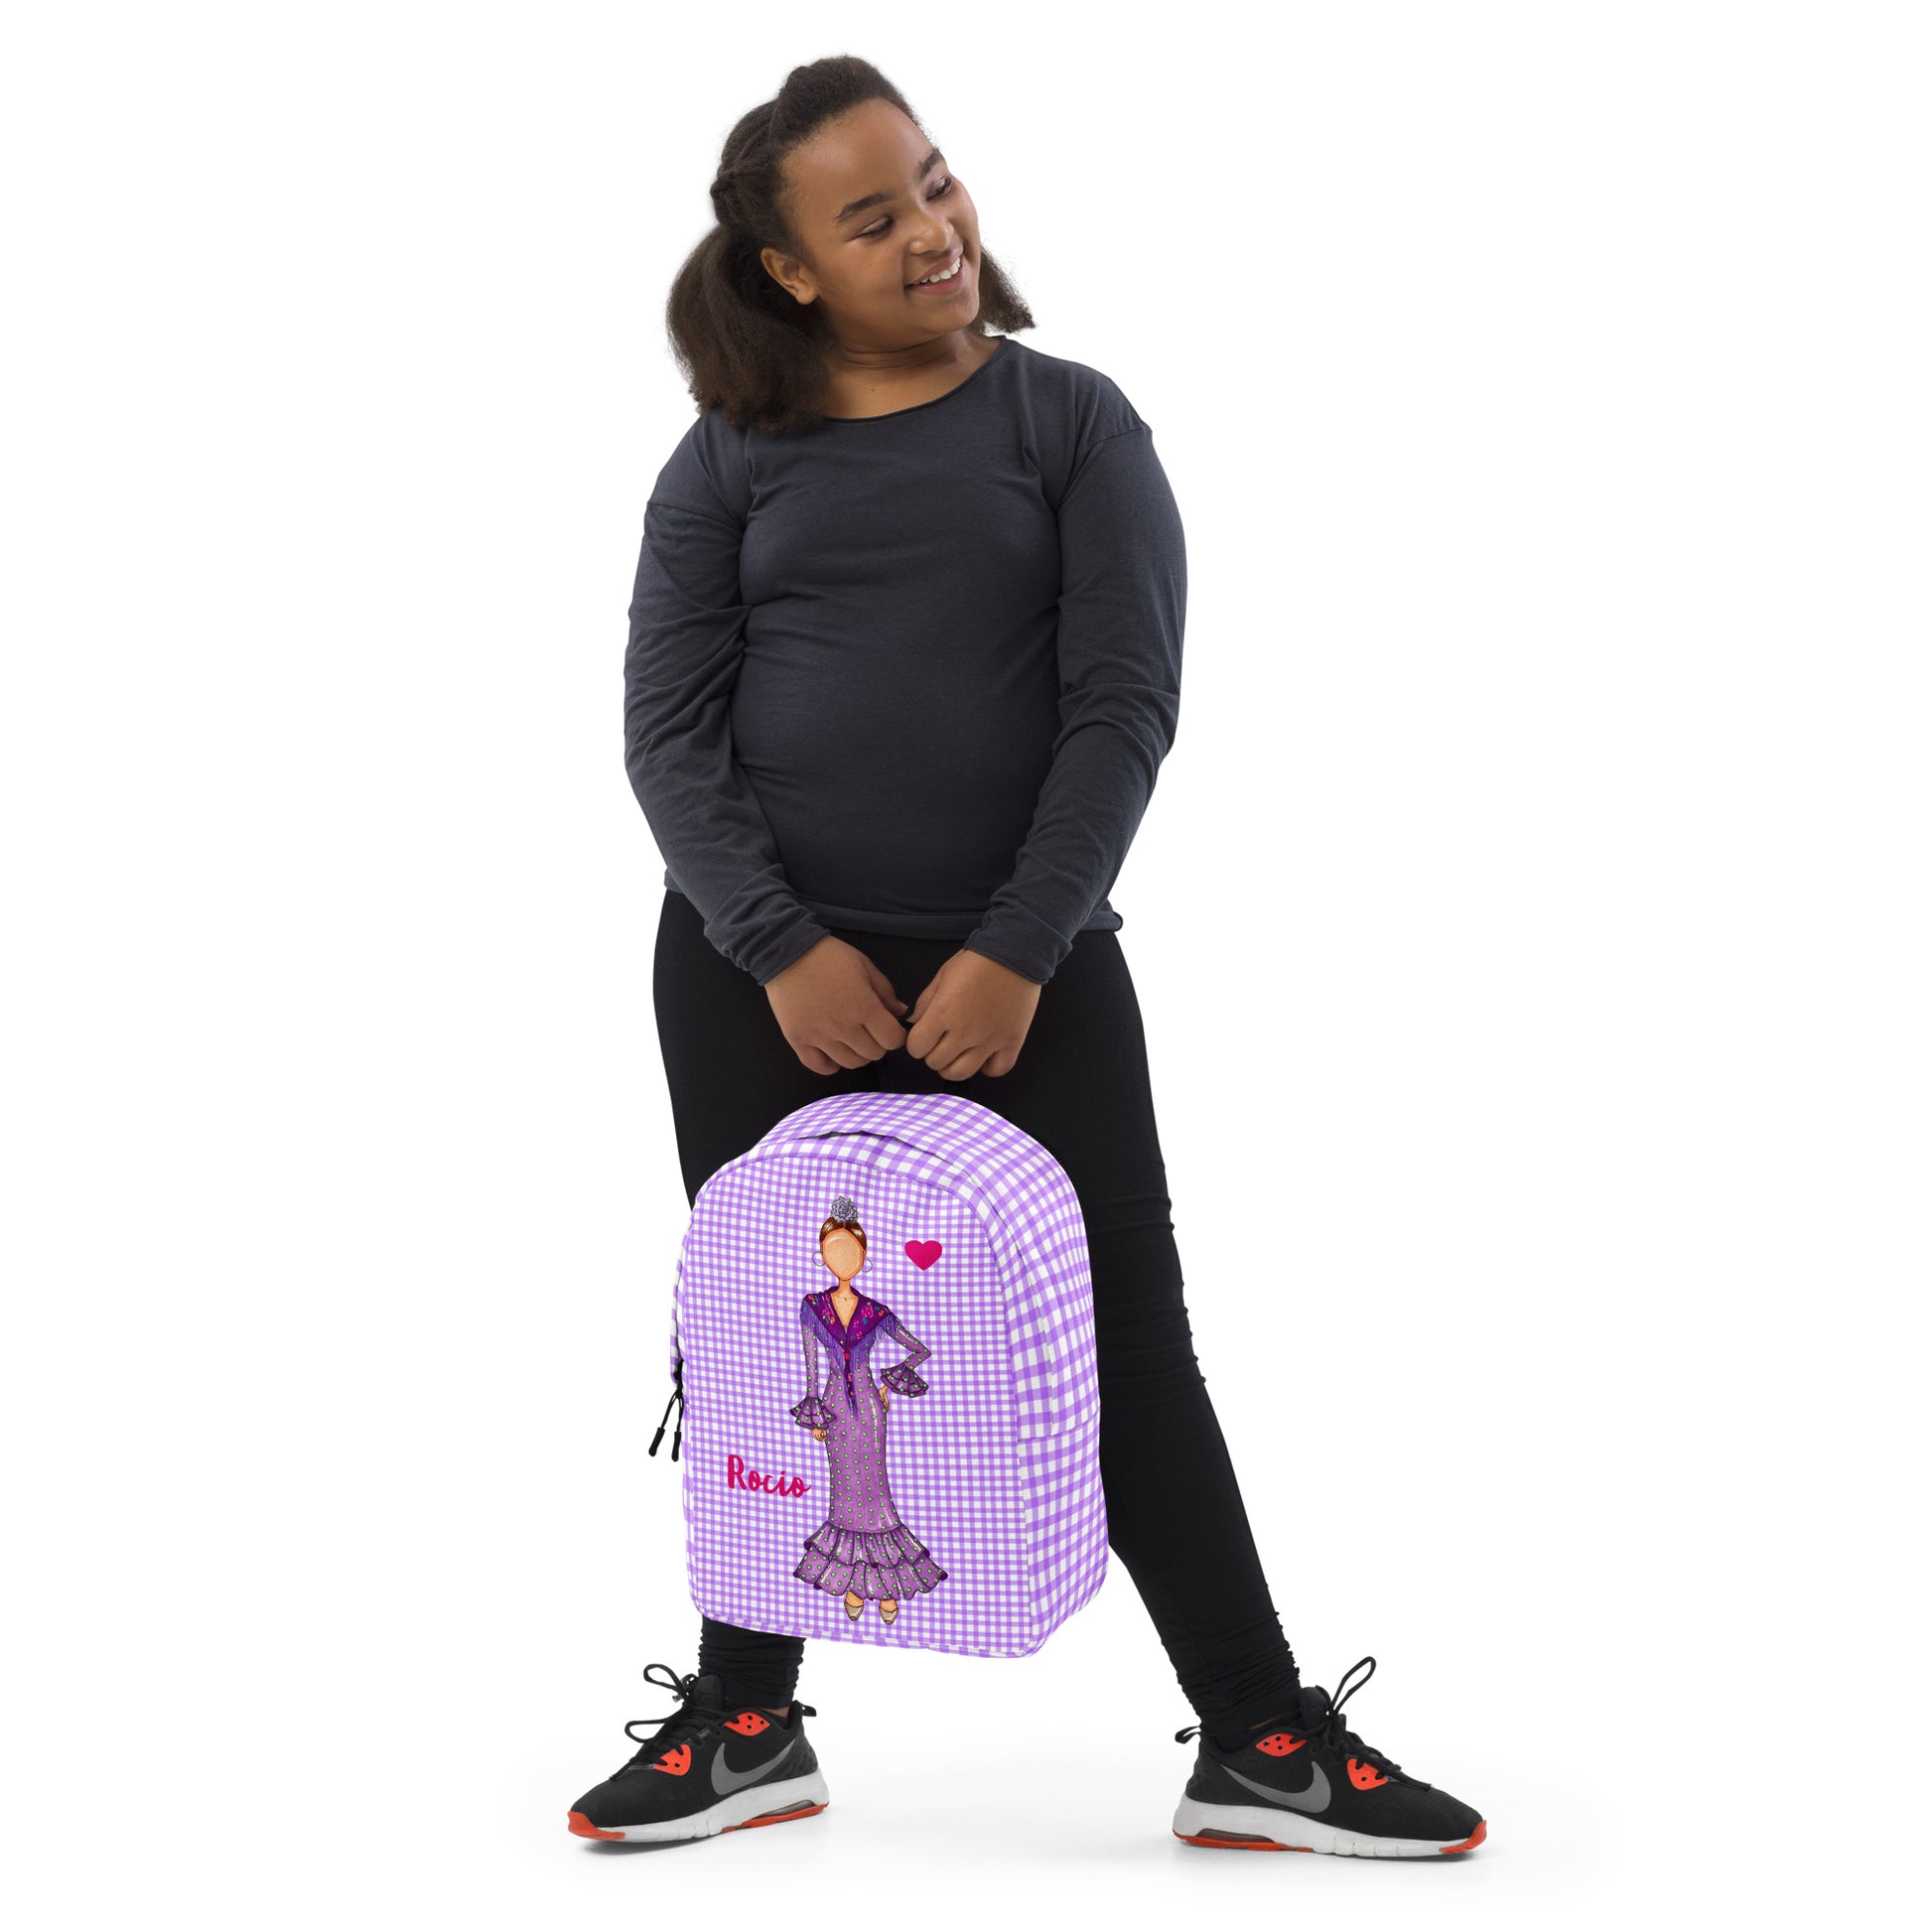 Flamenco Dancer Customizable Backpack, purple dress on a purple gingham check design. - IllustrArte